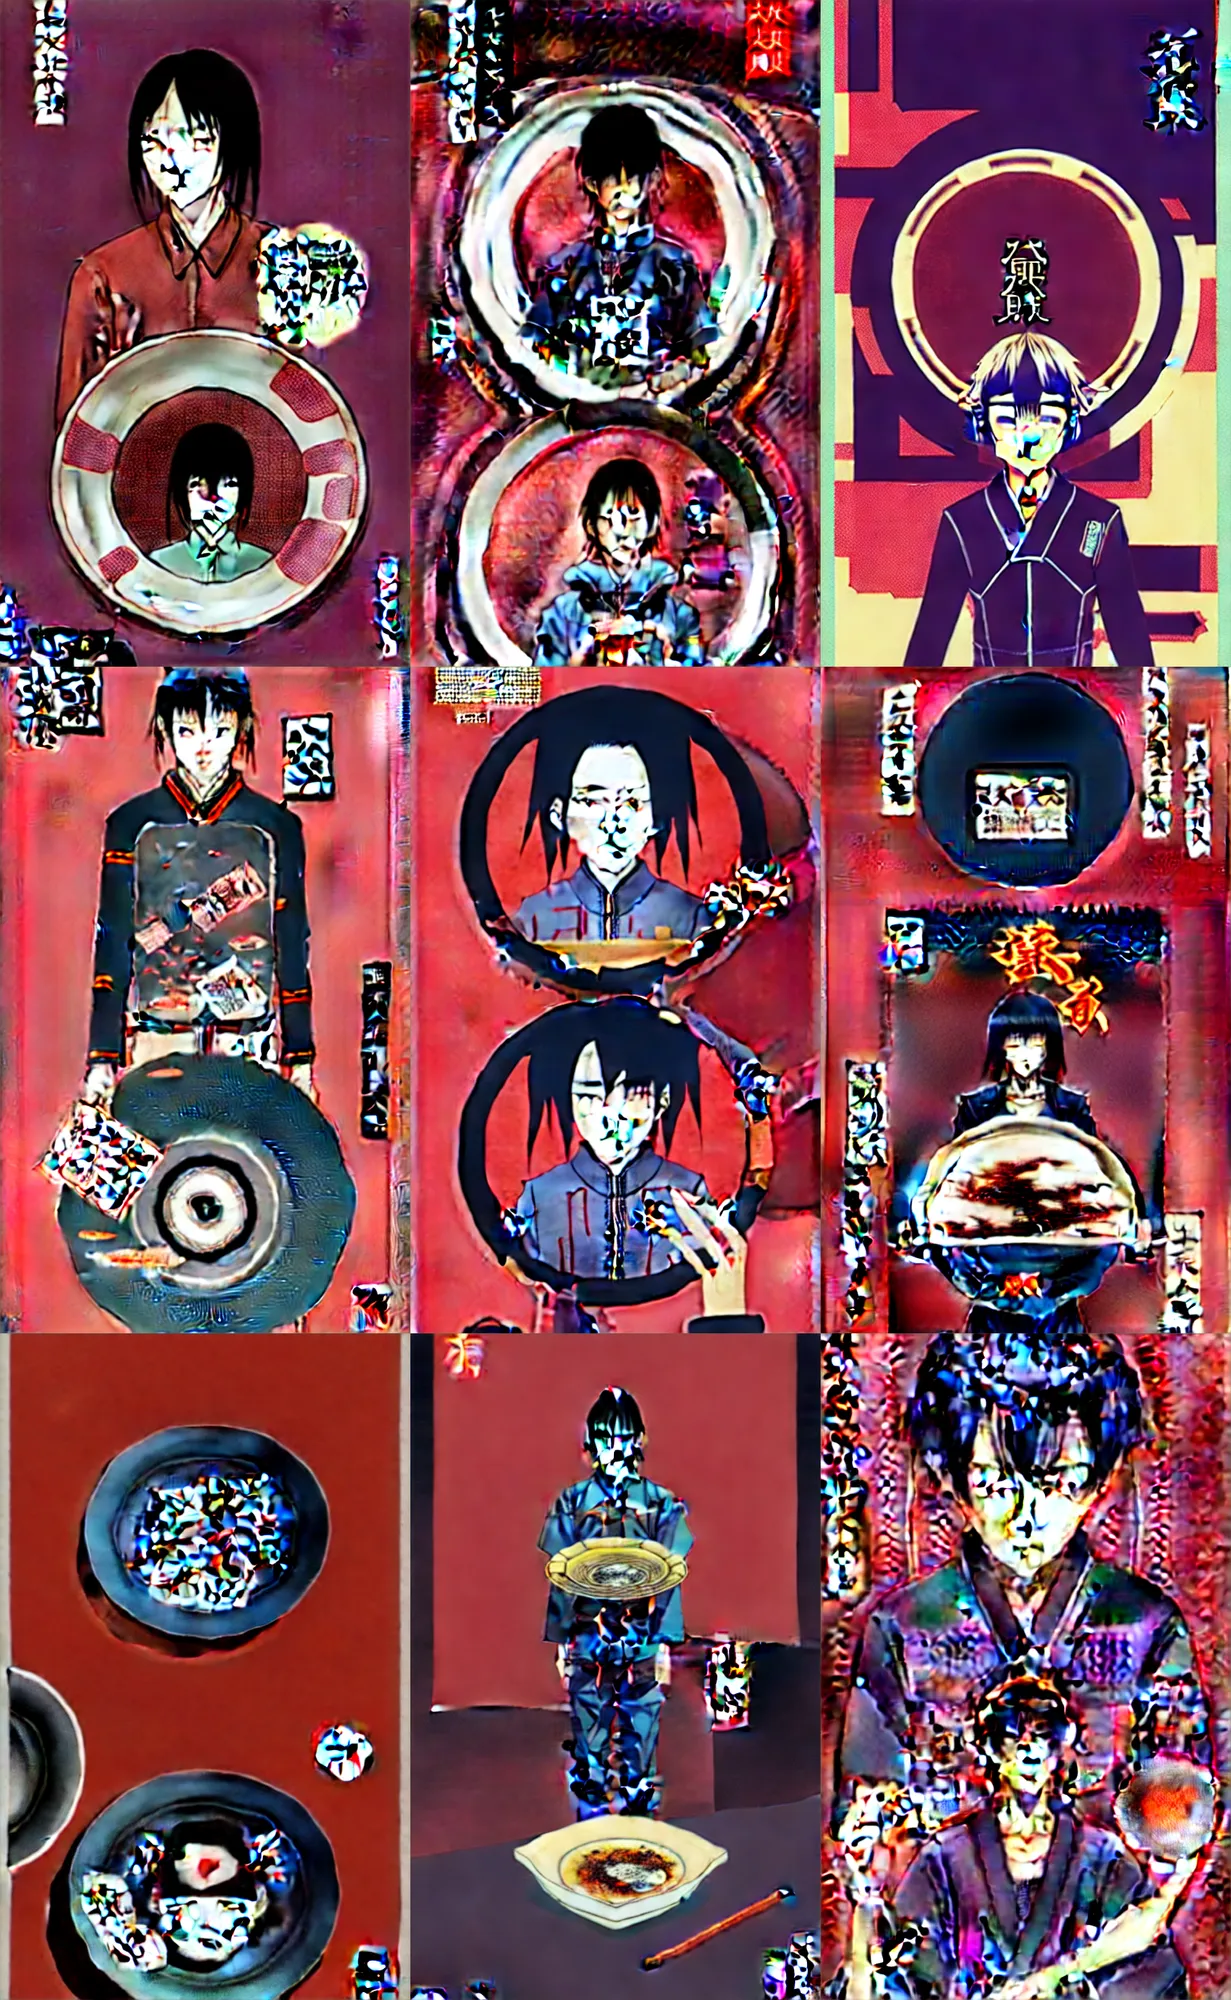 Prompt: package empty plate japanese cyberpunk chinese illustration concept art trending on arstation 4 k, graphic design, by kim jung ji, katsuhiro otomo and junji ito